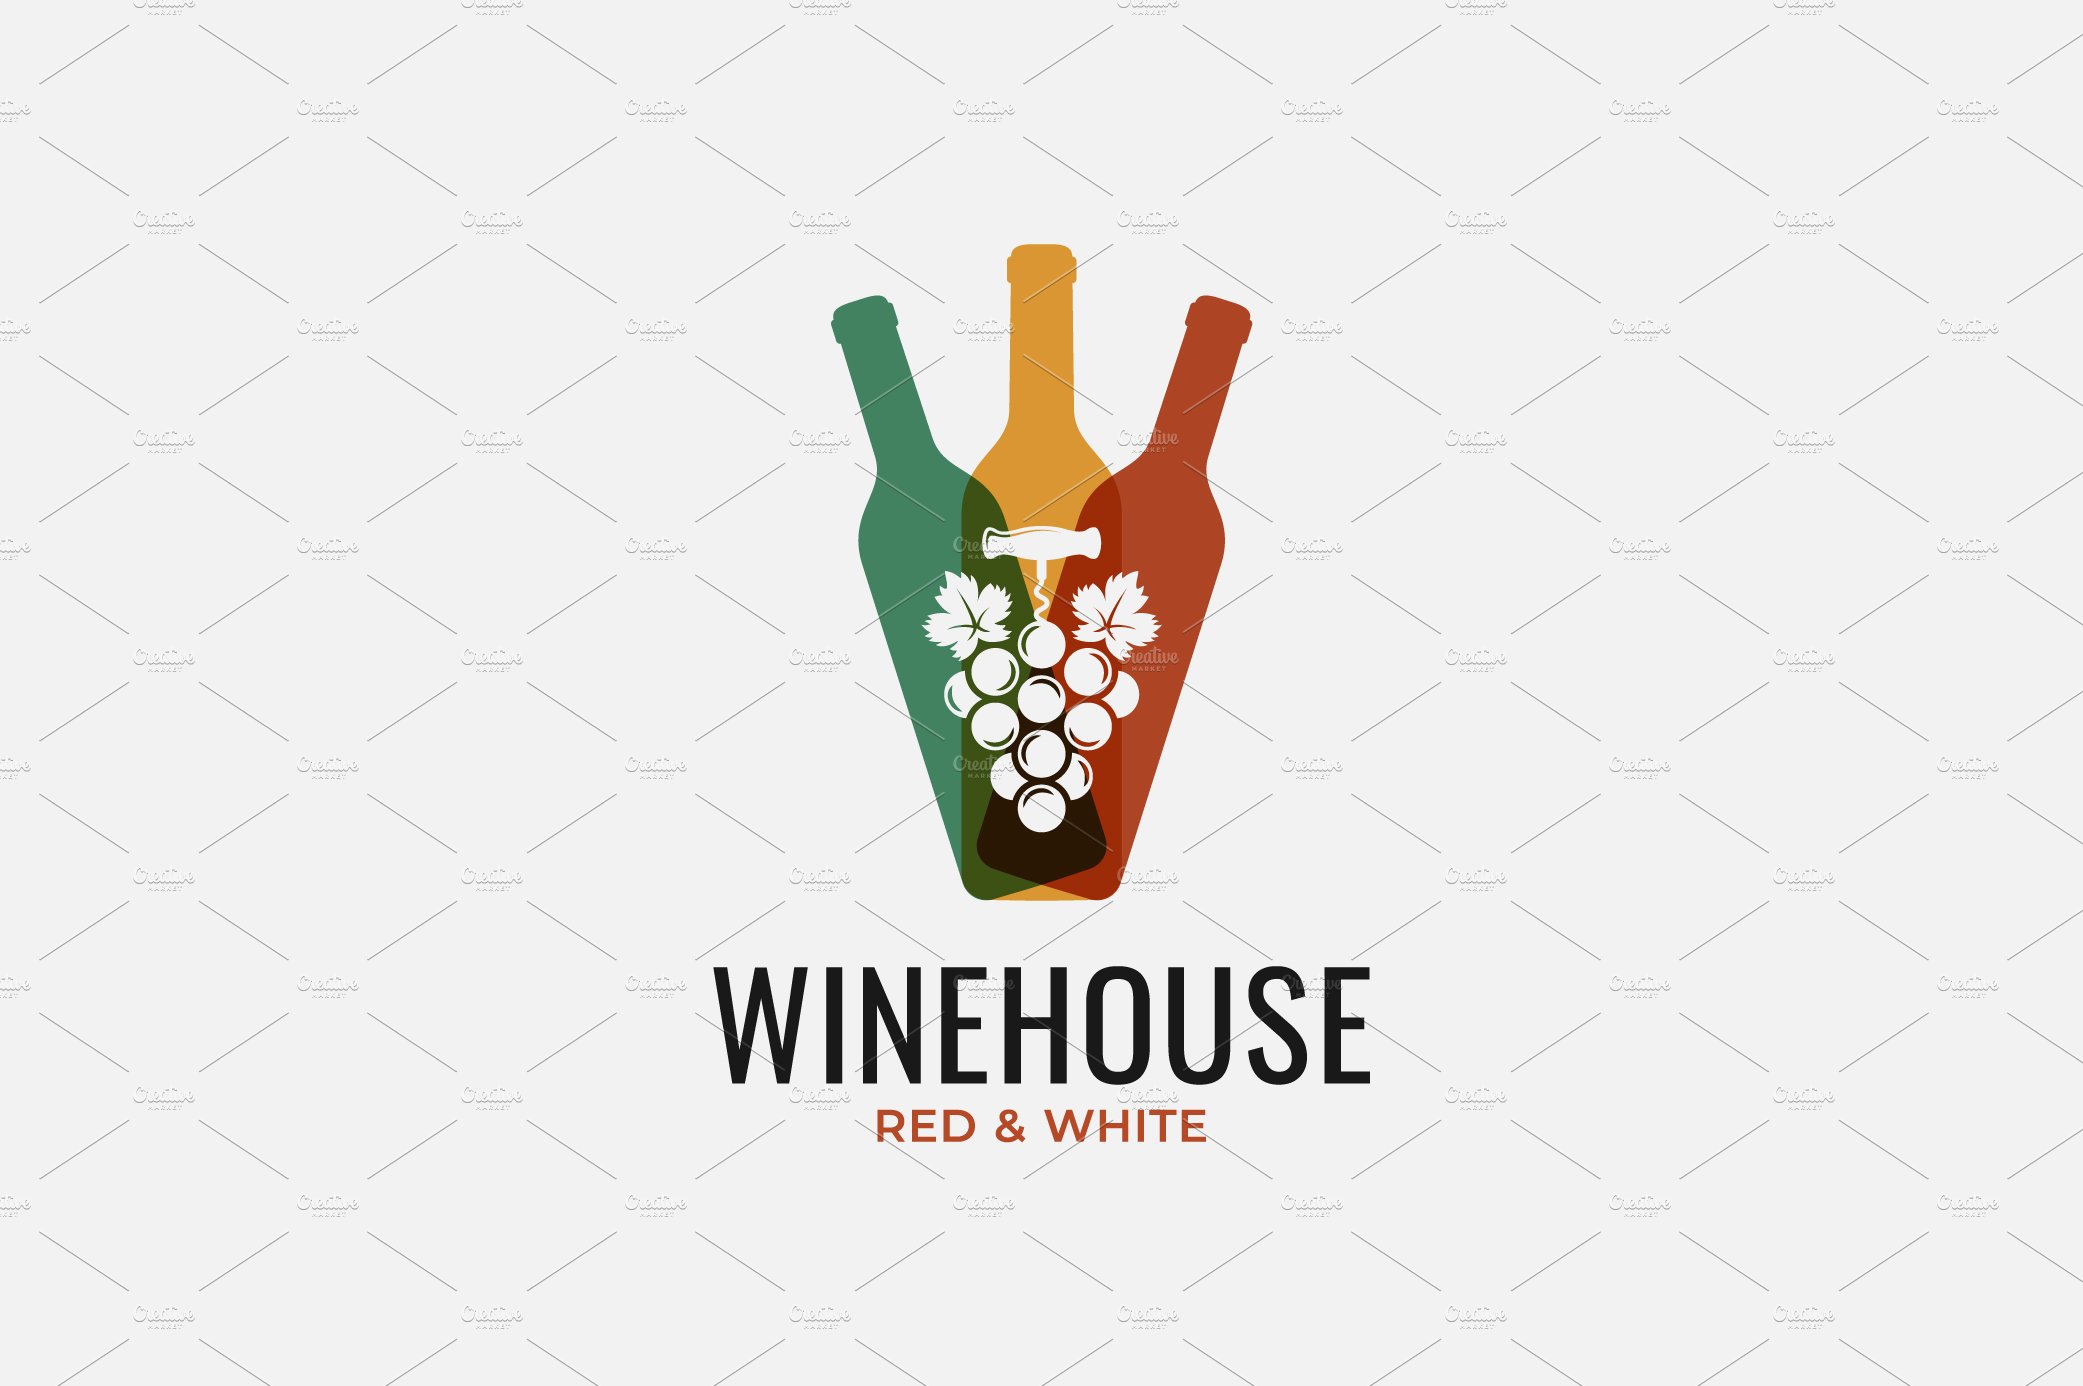 WIne bottles logo. Wine grapes. cover image.